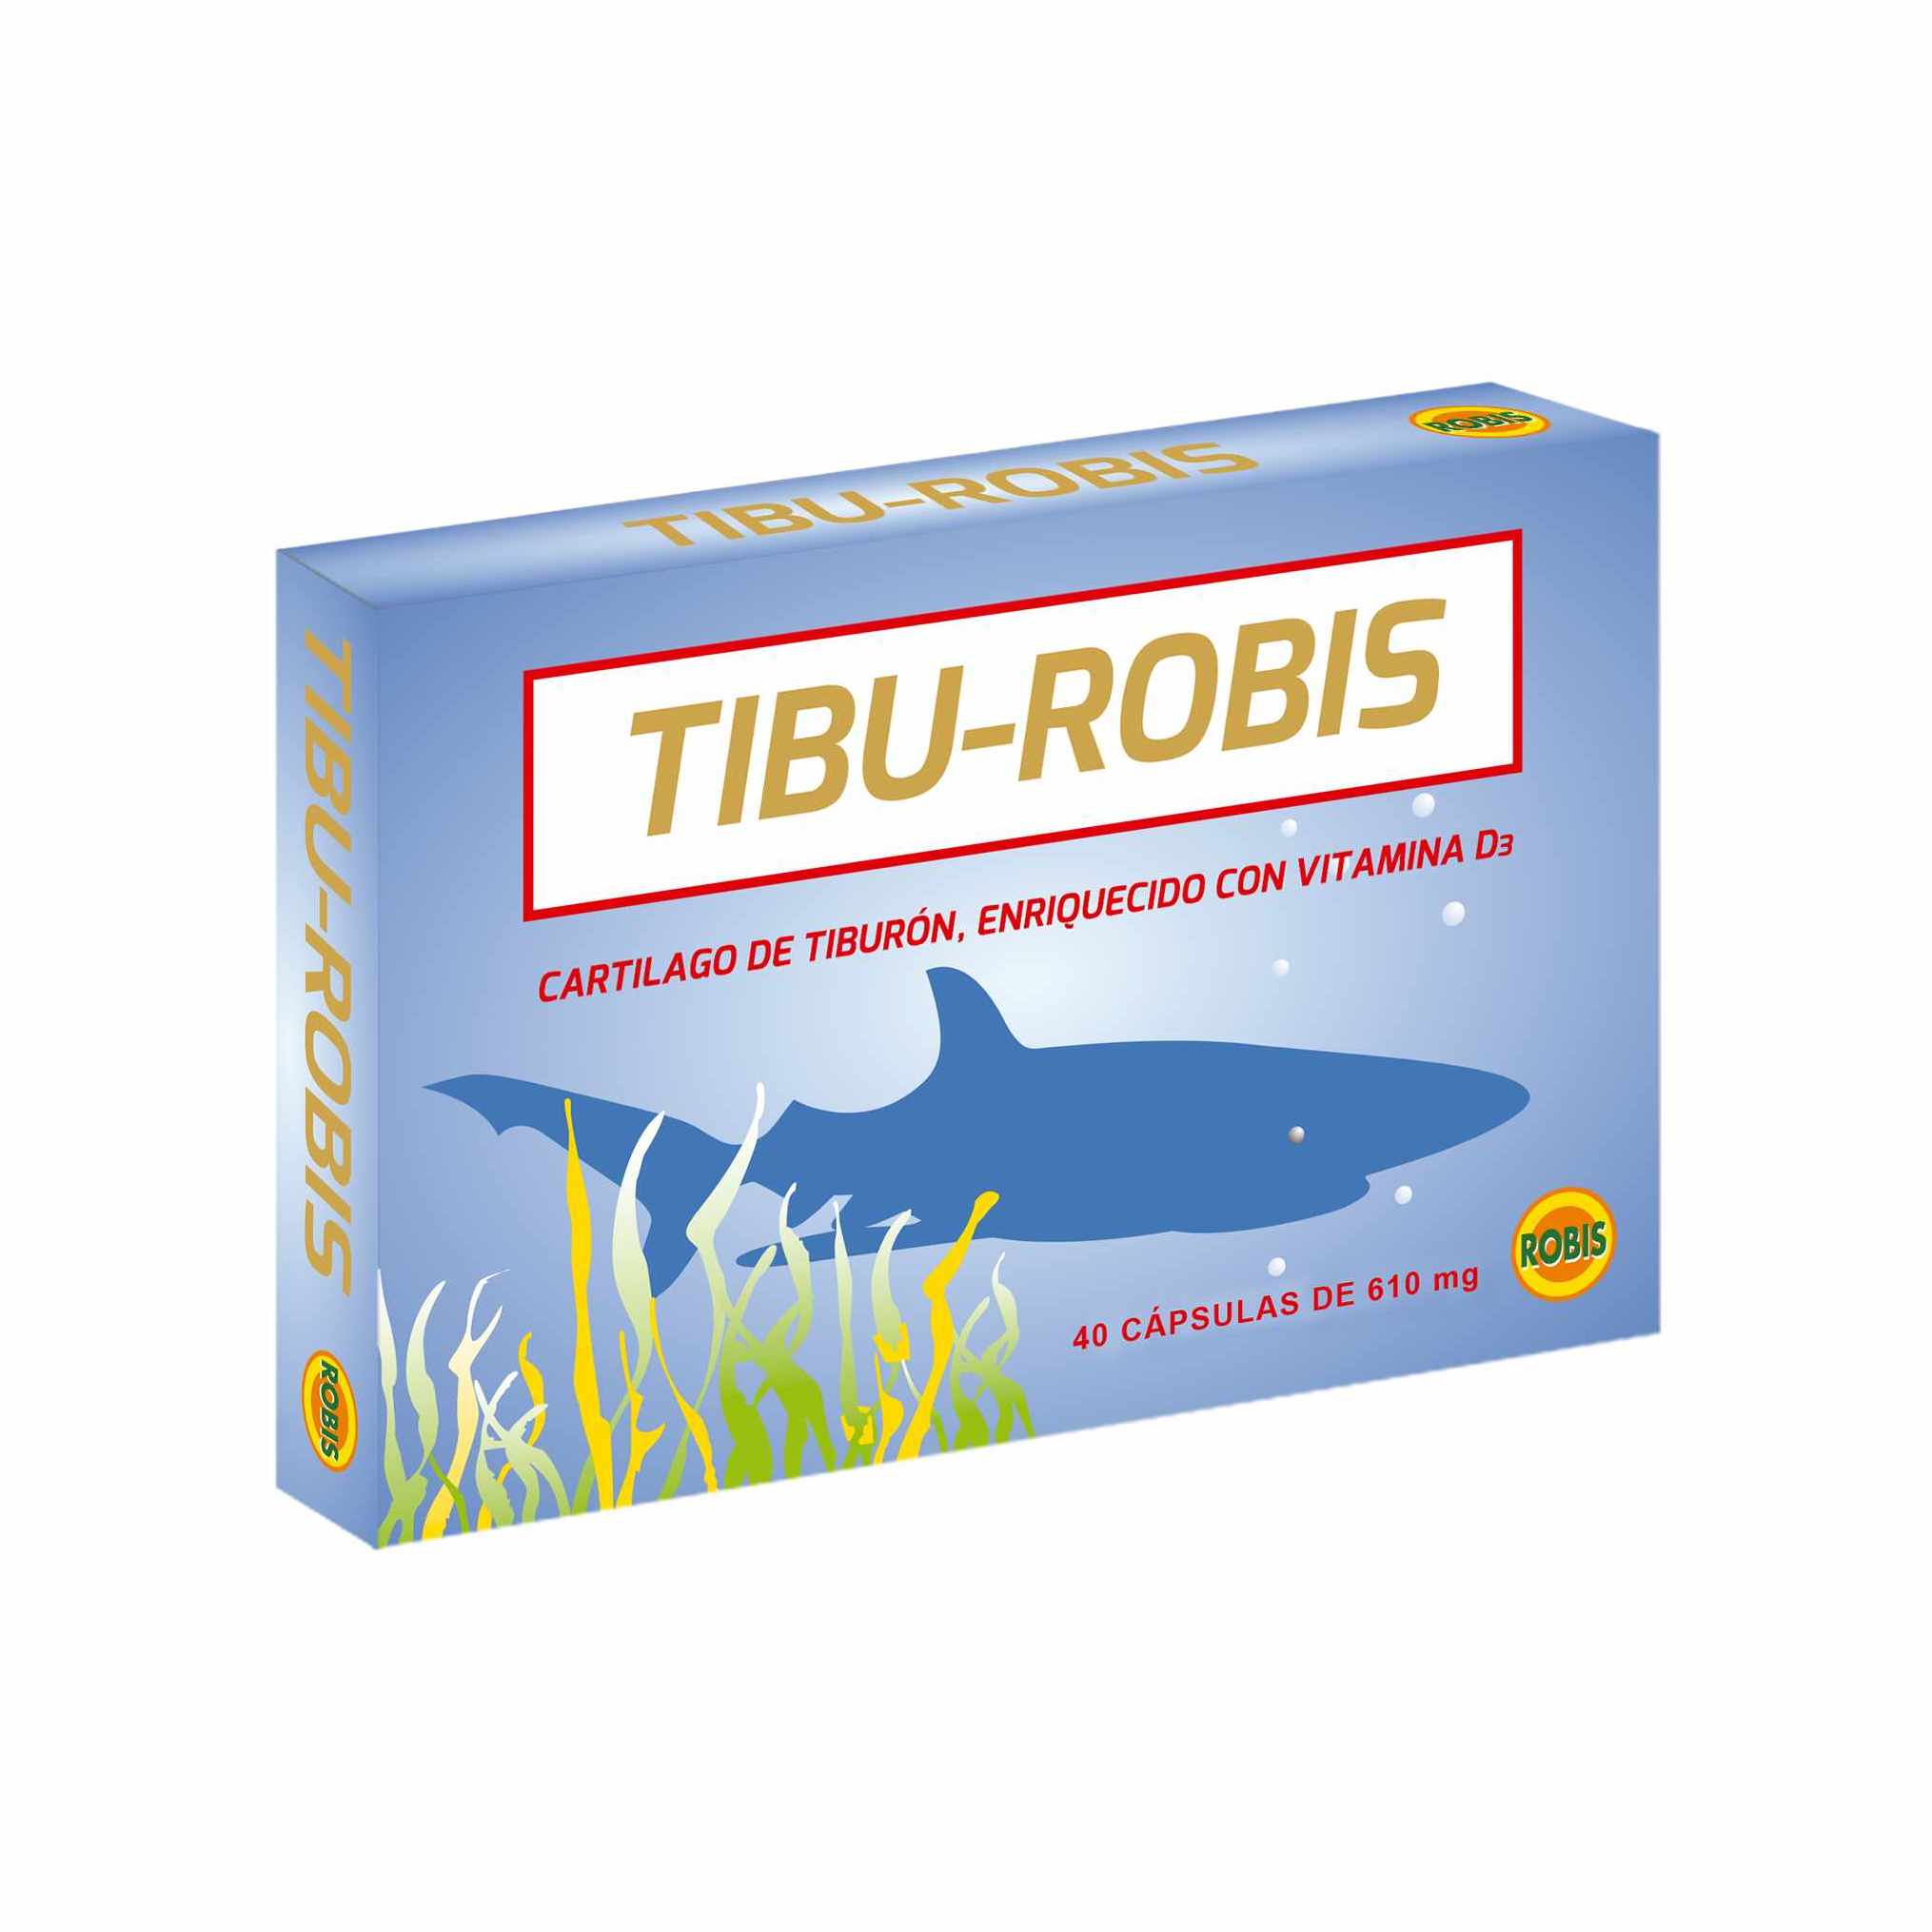 Tibu-Robis